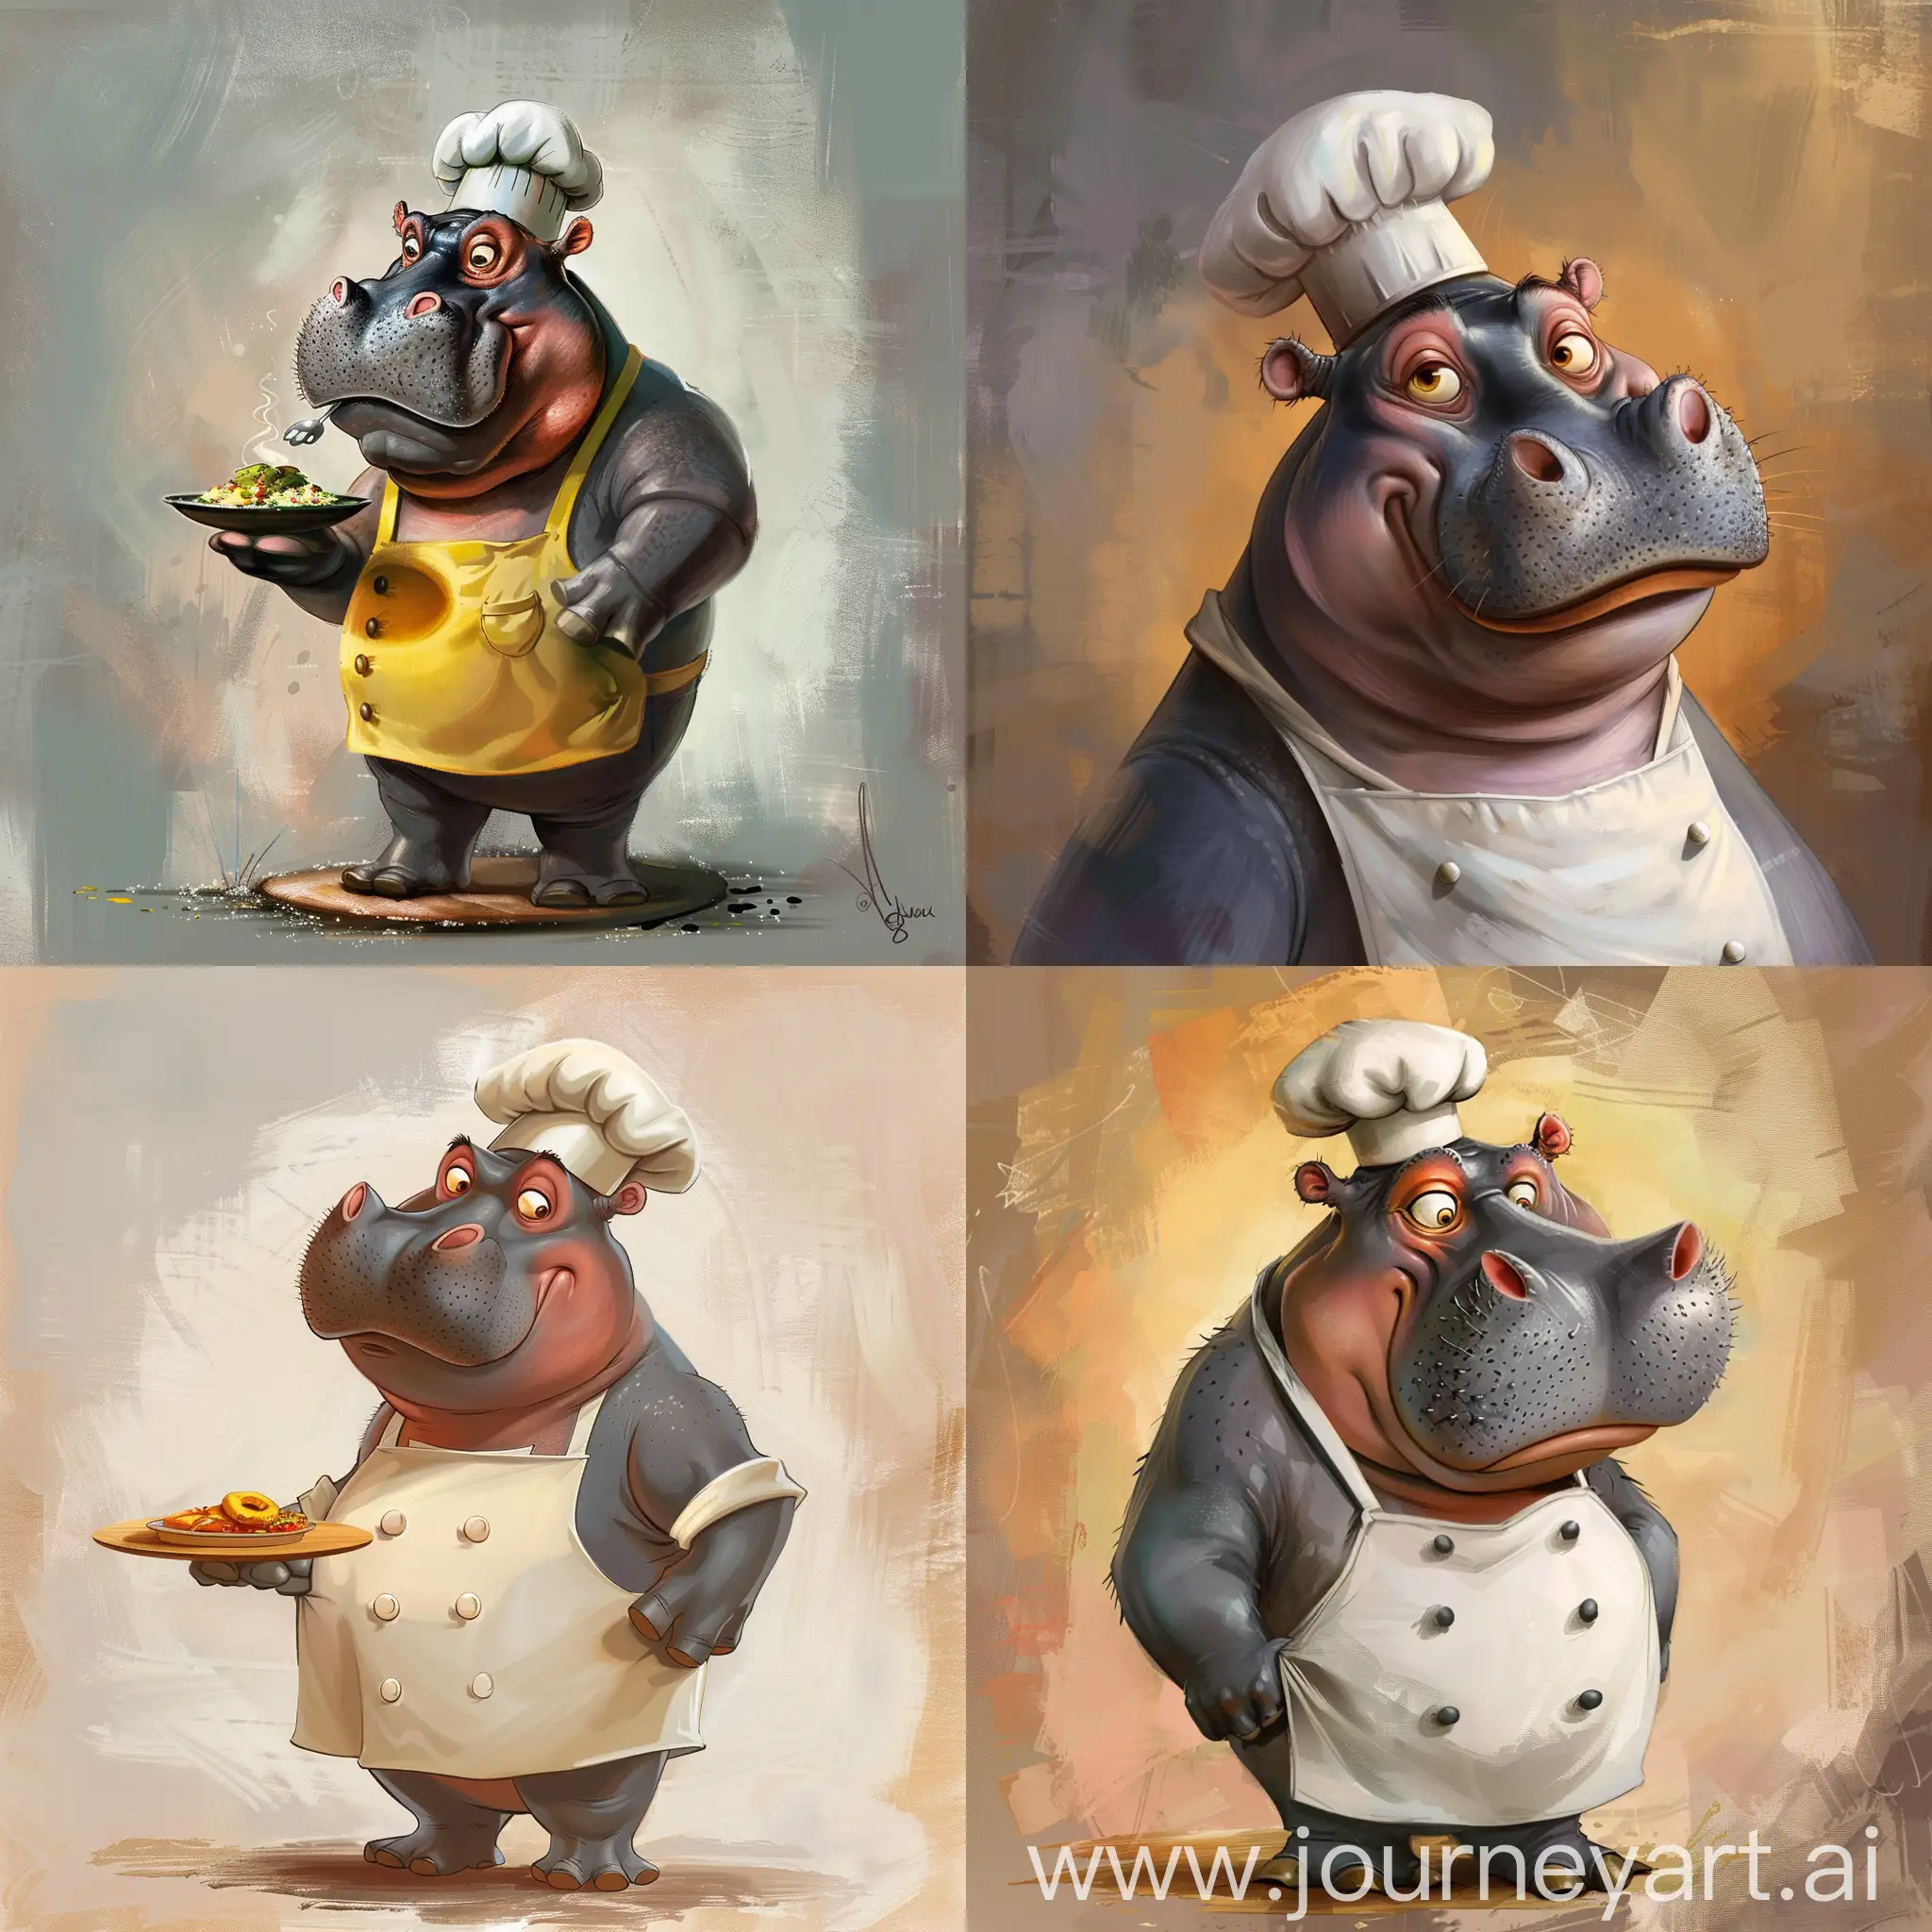 A Hippo chef Disney artistic style